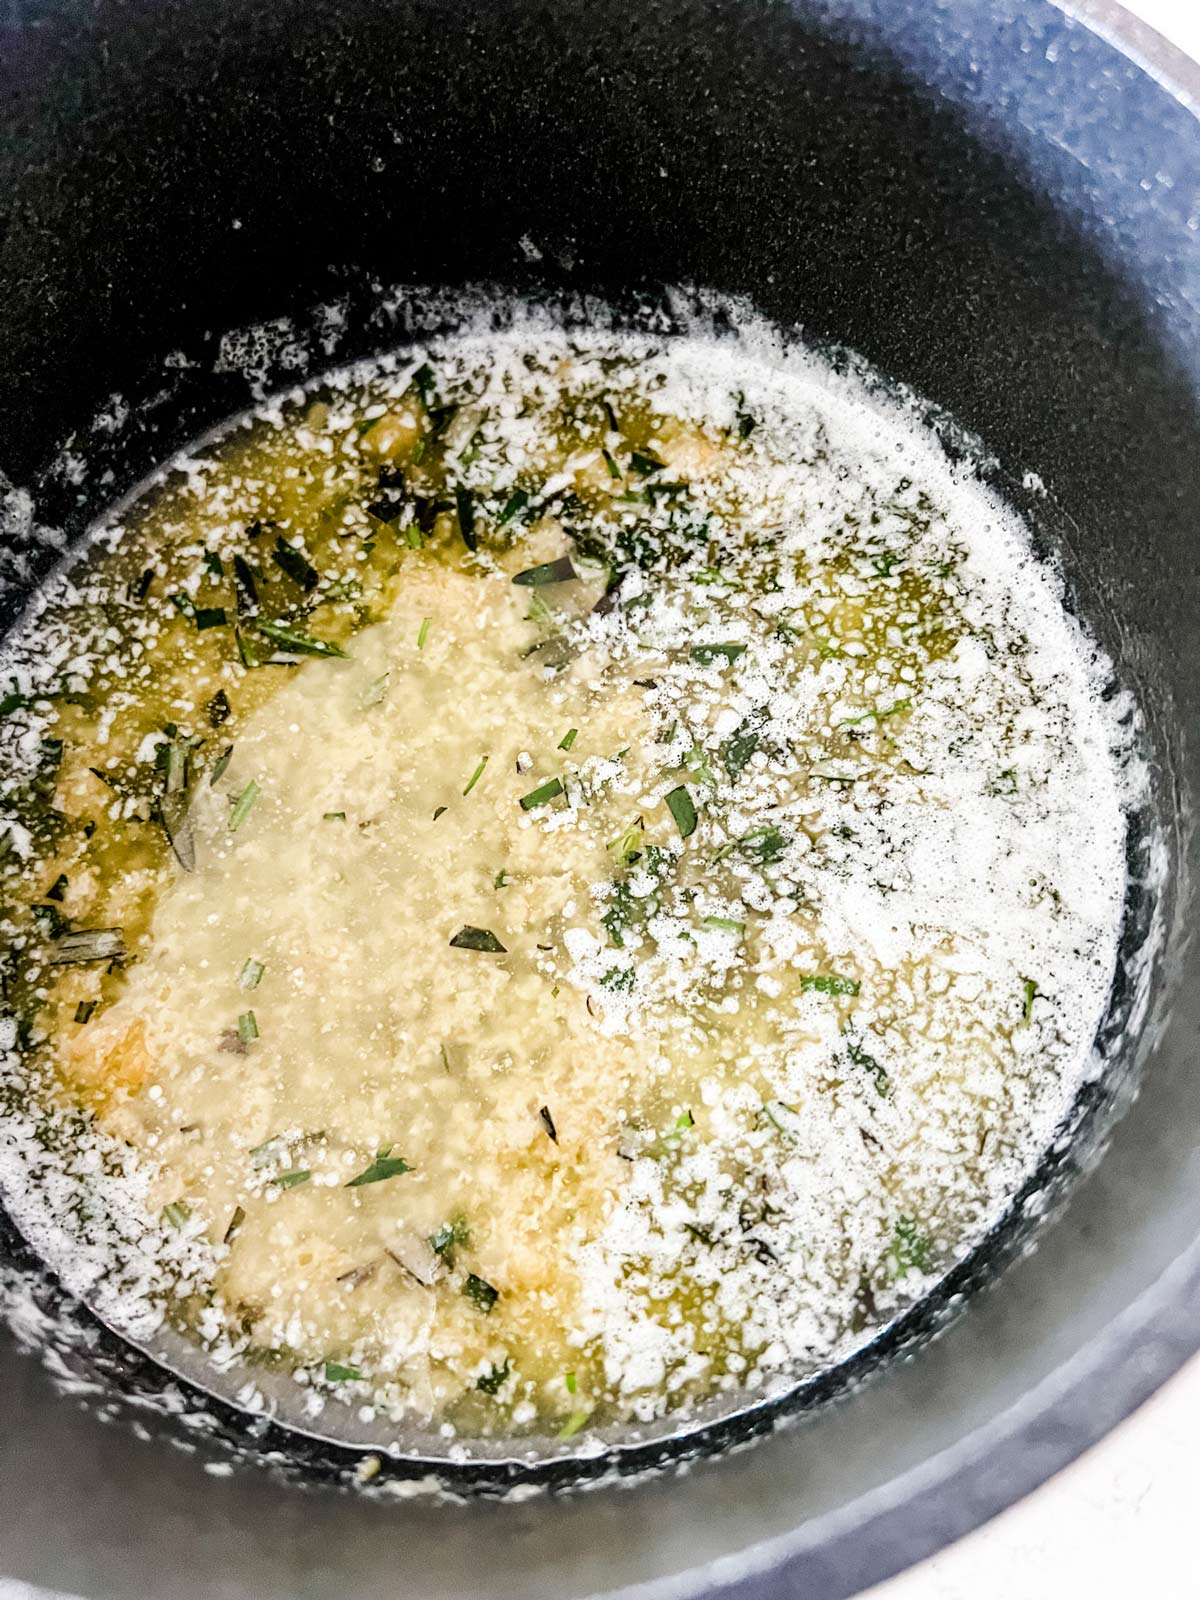 Garlic butter in a small sauce pan.